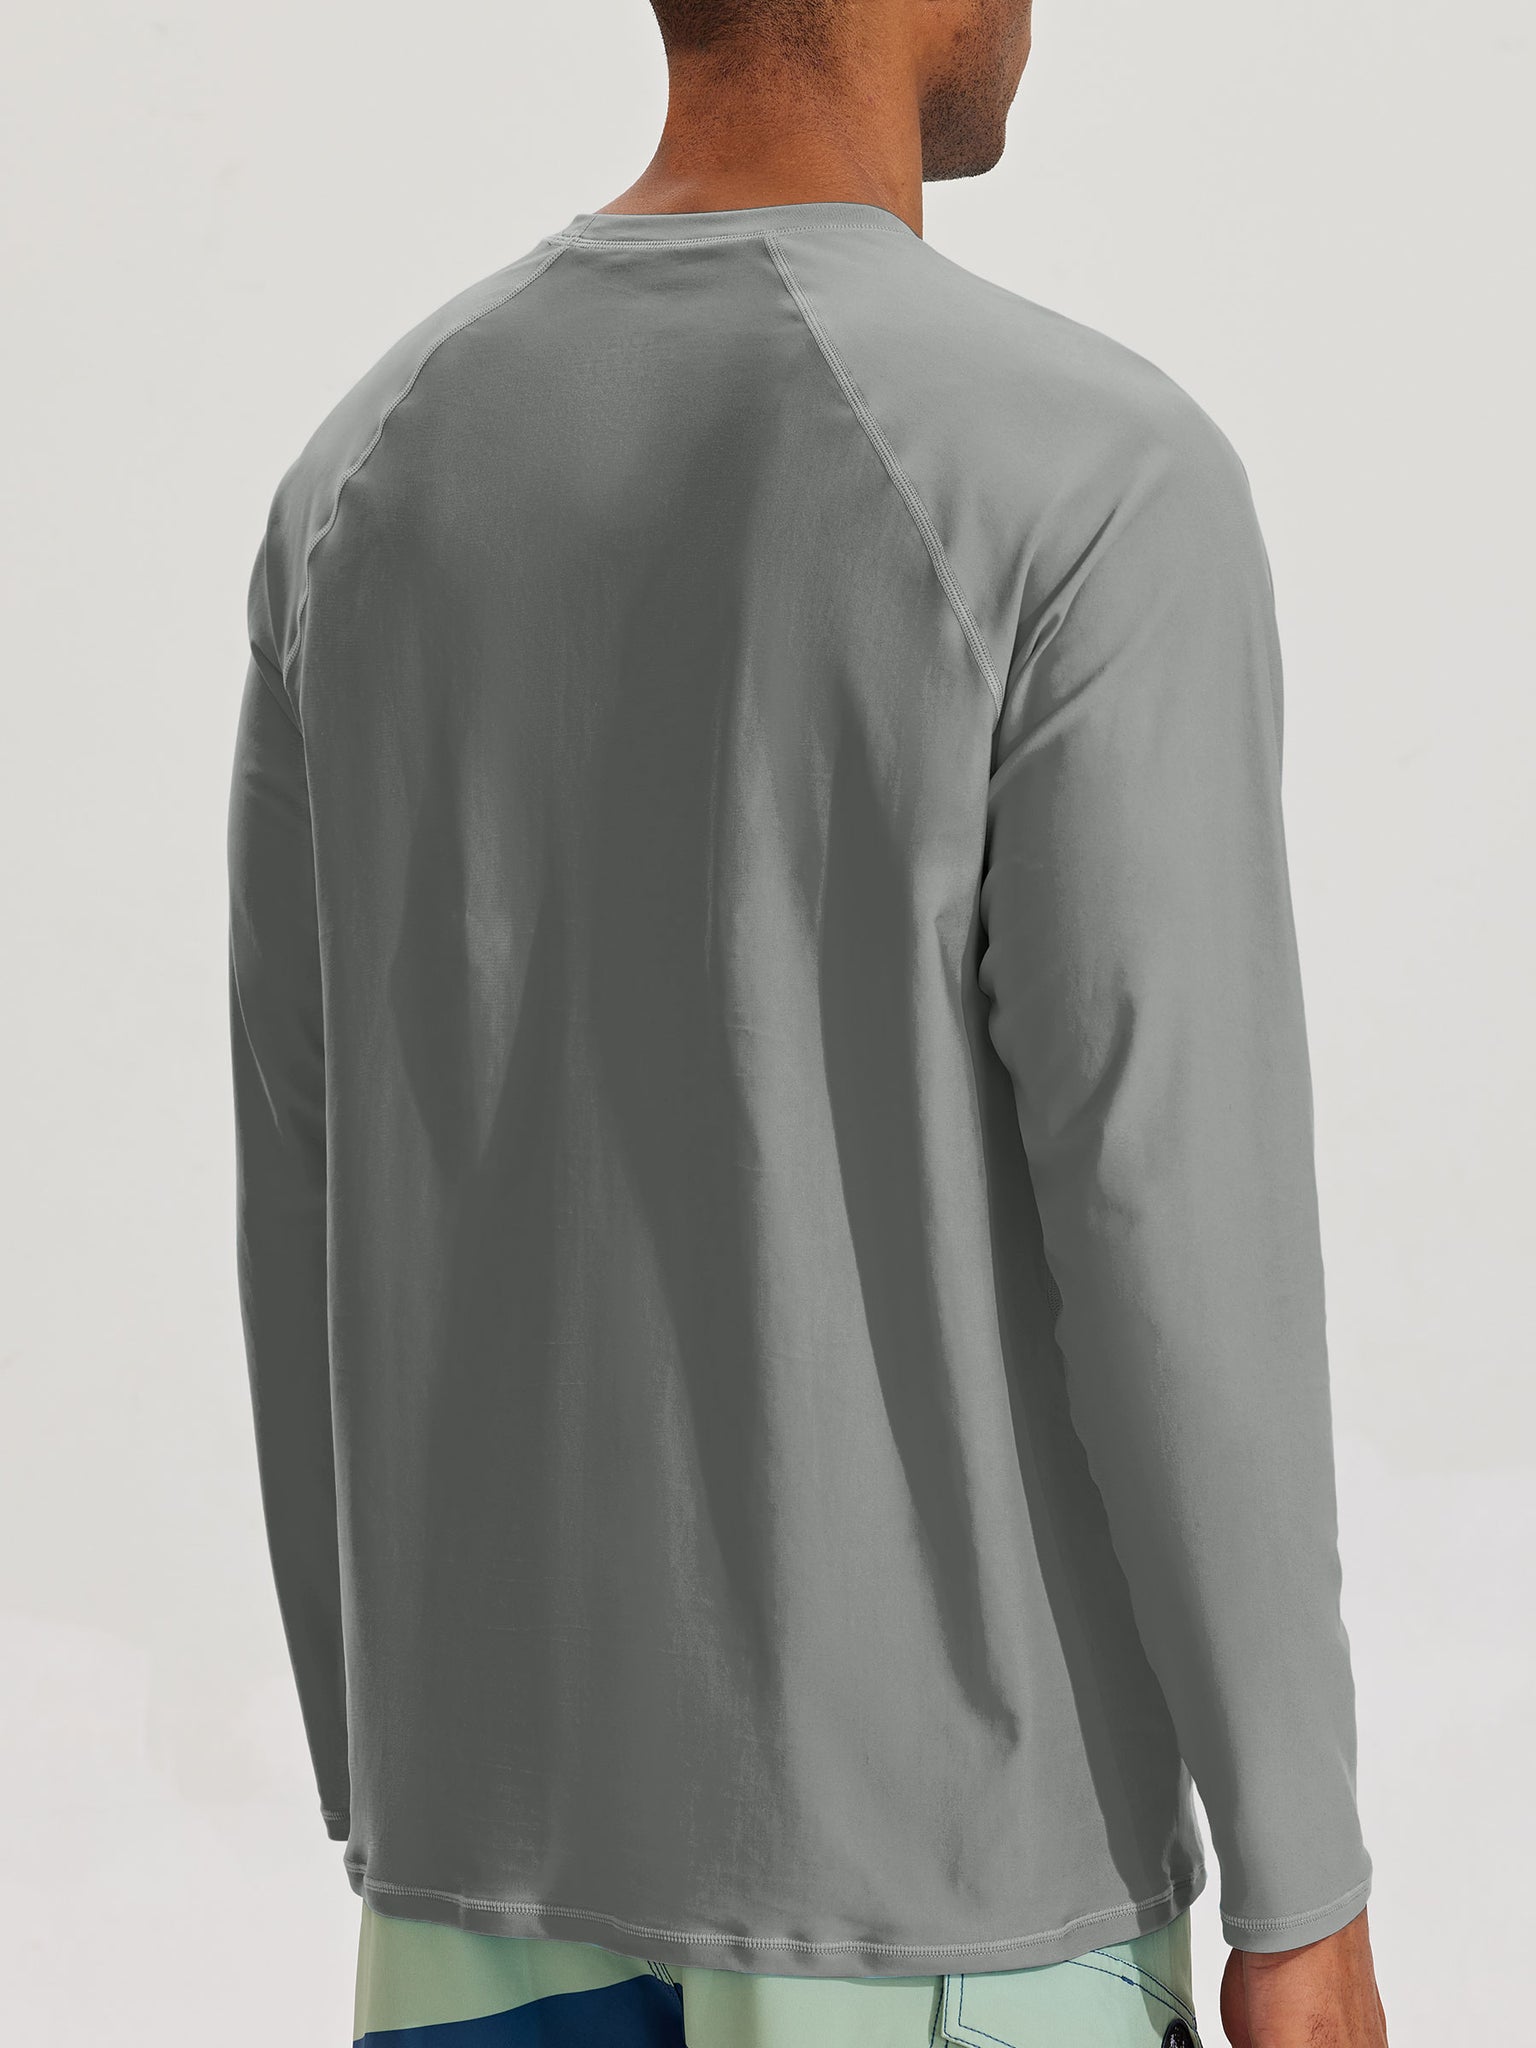 Men's Sun Protection Long Sleeve Shirt_Gray_model3